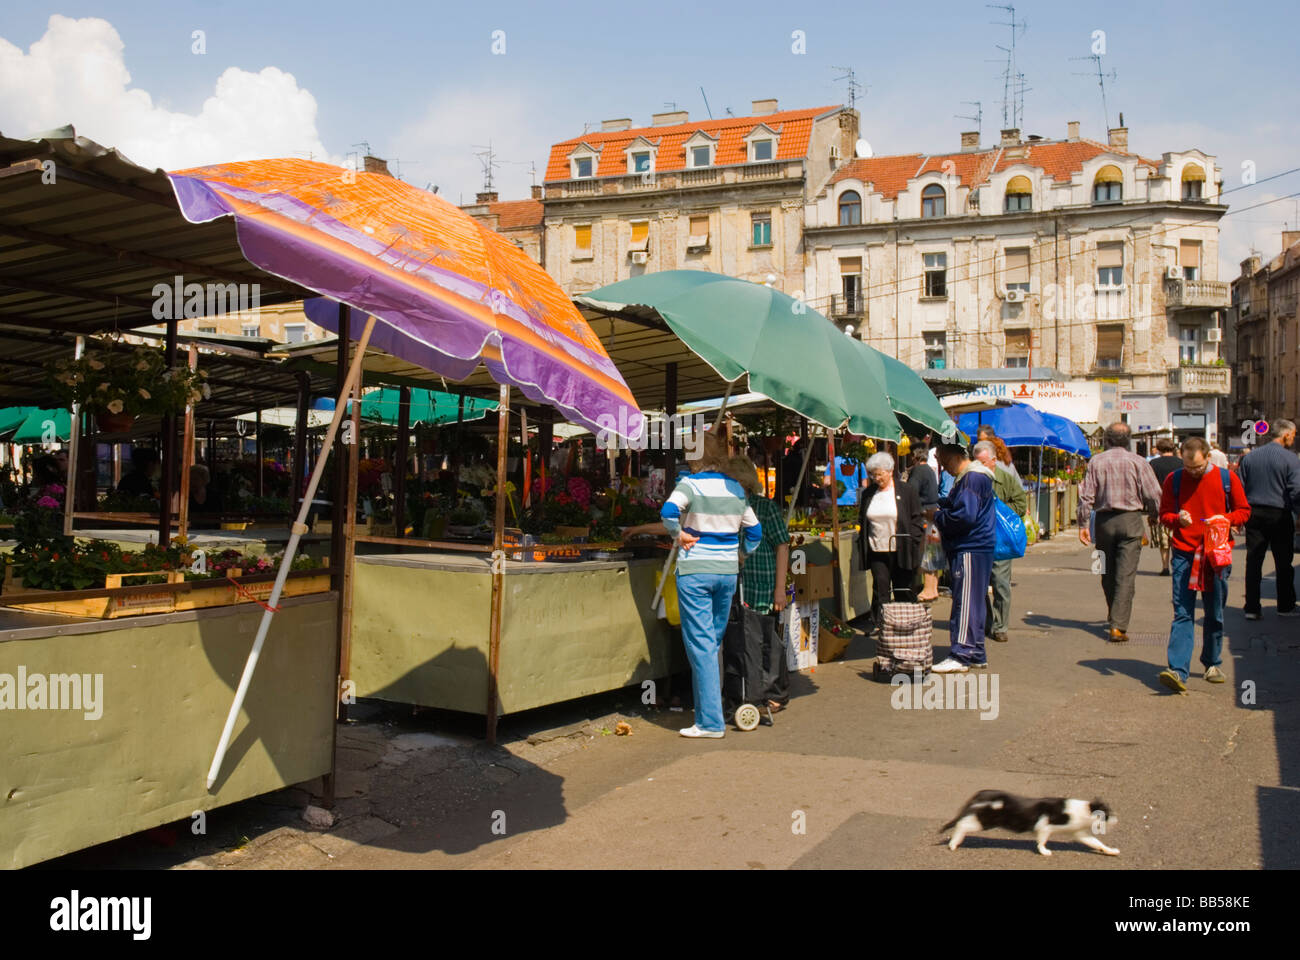 Bajlonova pijaca market in central Belgrade Serbia Europe Stock Photo